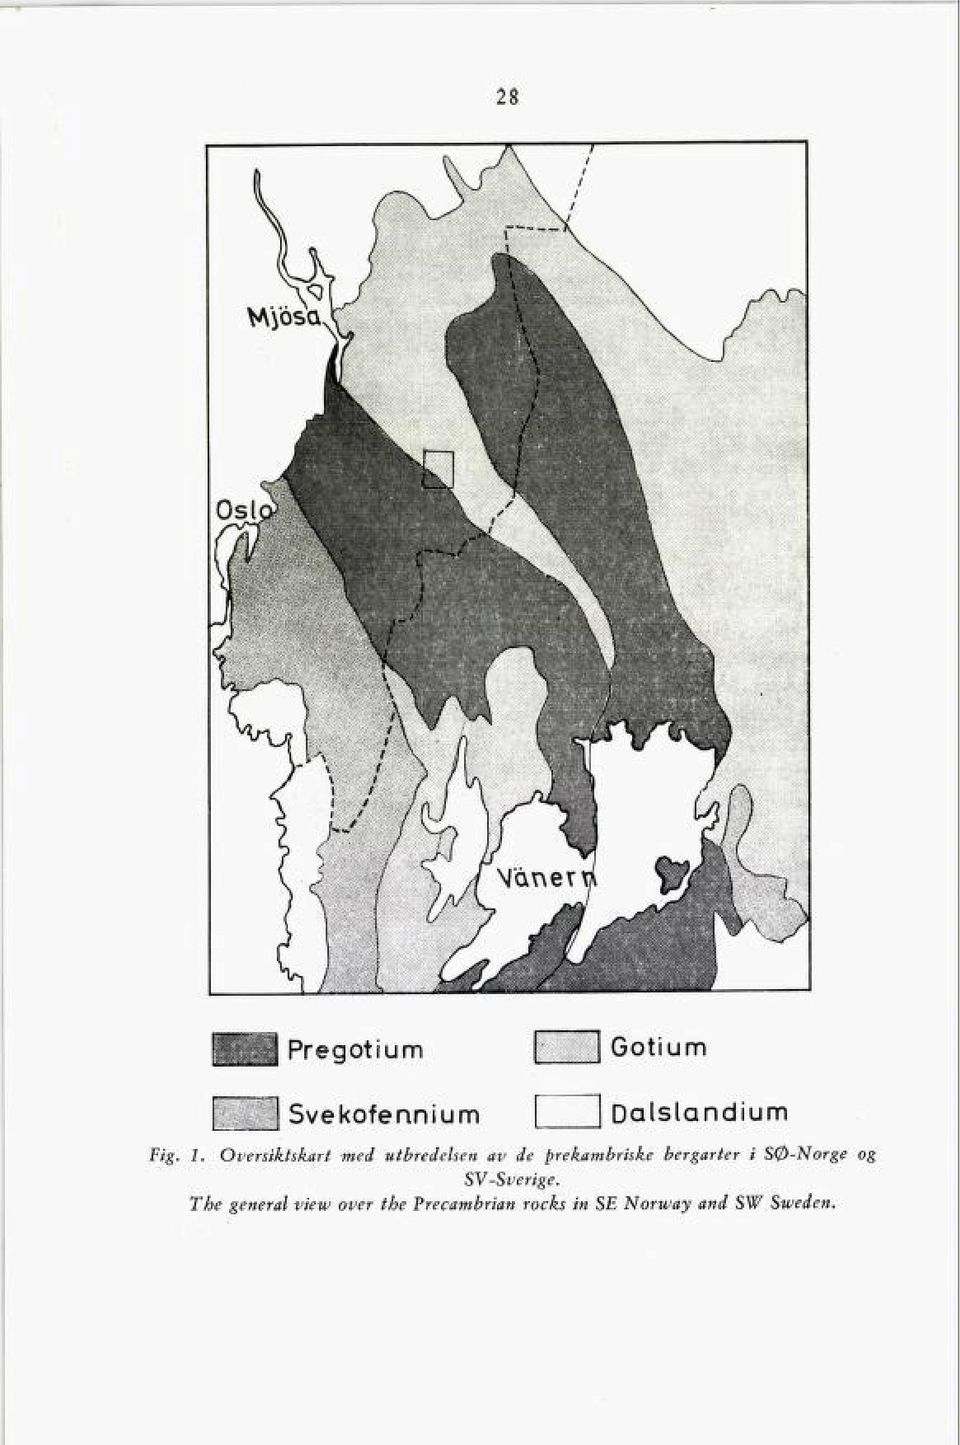 bergarter i SØ-Norge og SV-Sverige.